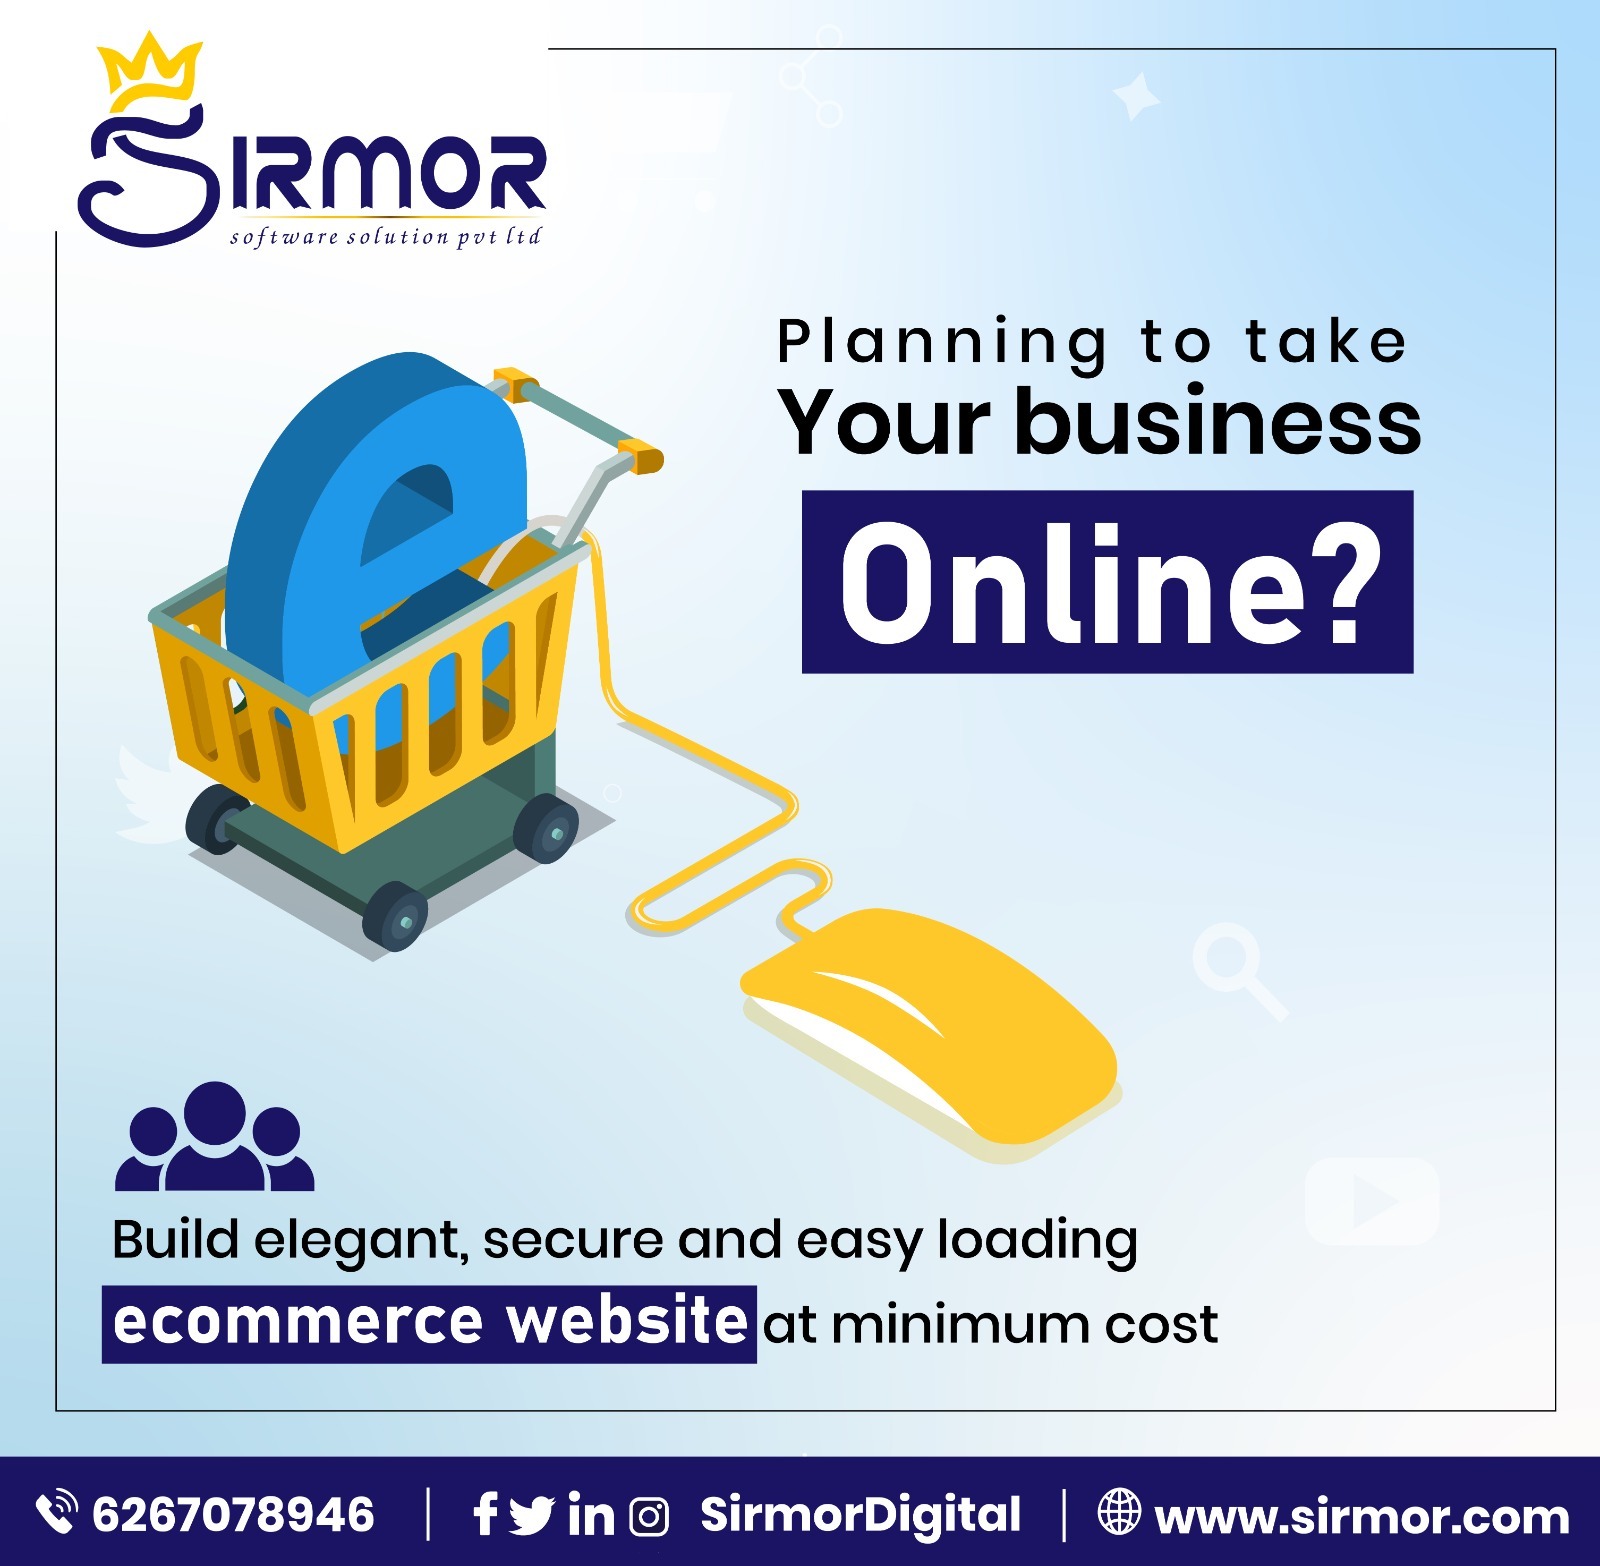 Sirmor Software Website Desiging And Development